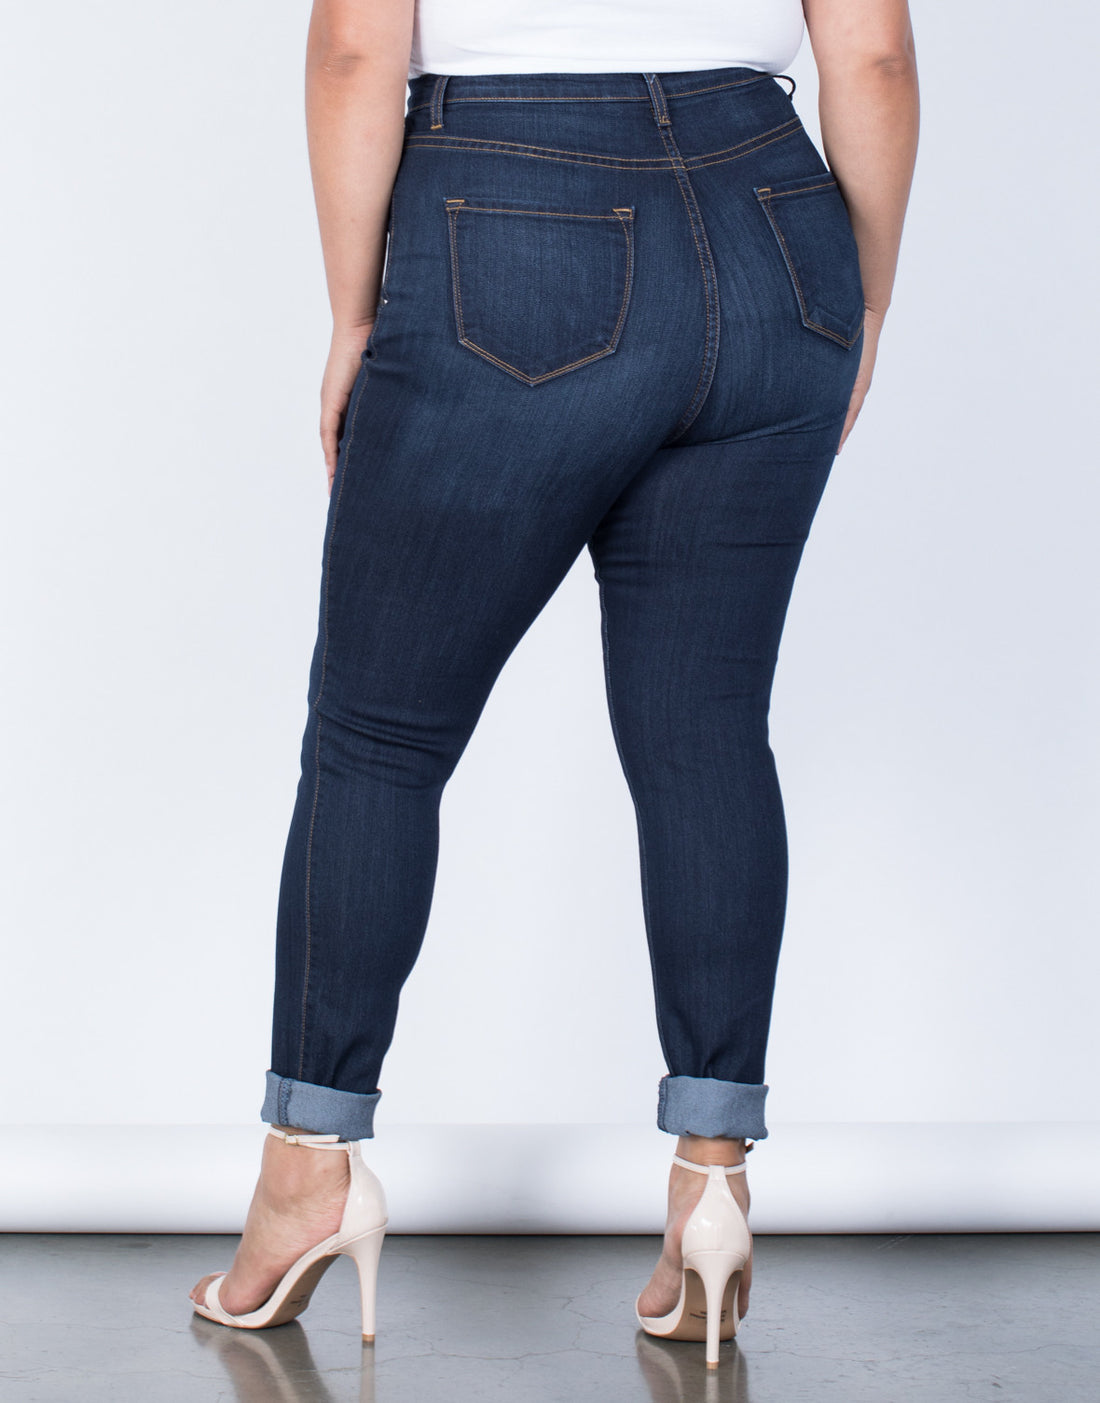 Dark Blue Denim Plus Size High Waisted Skinny Jeans - Back View